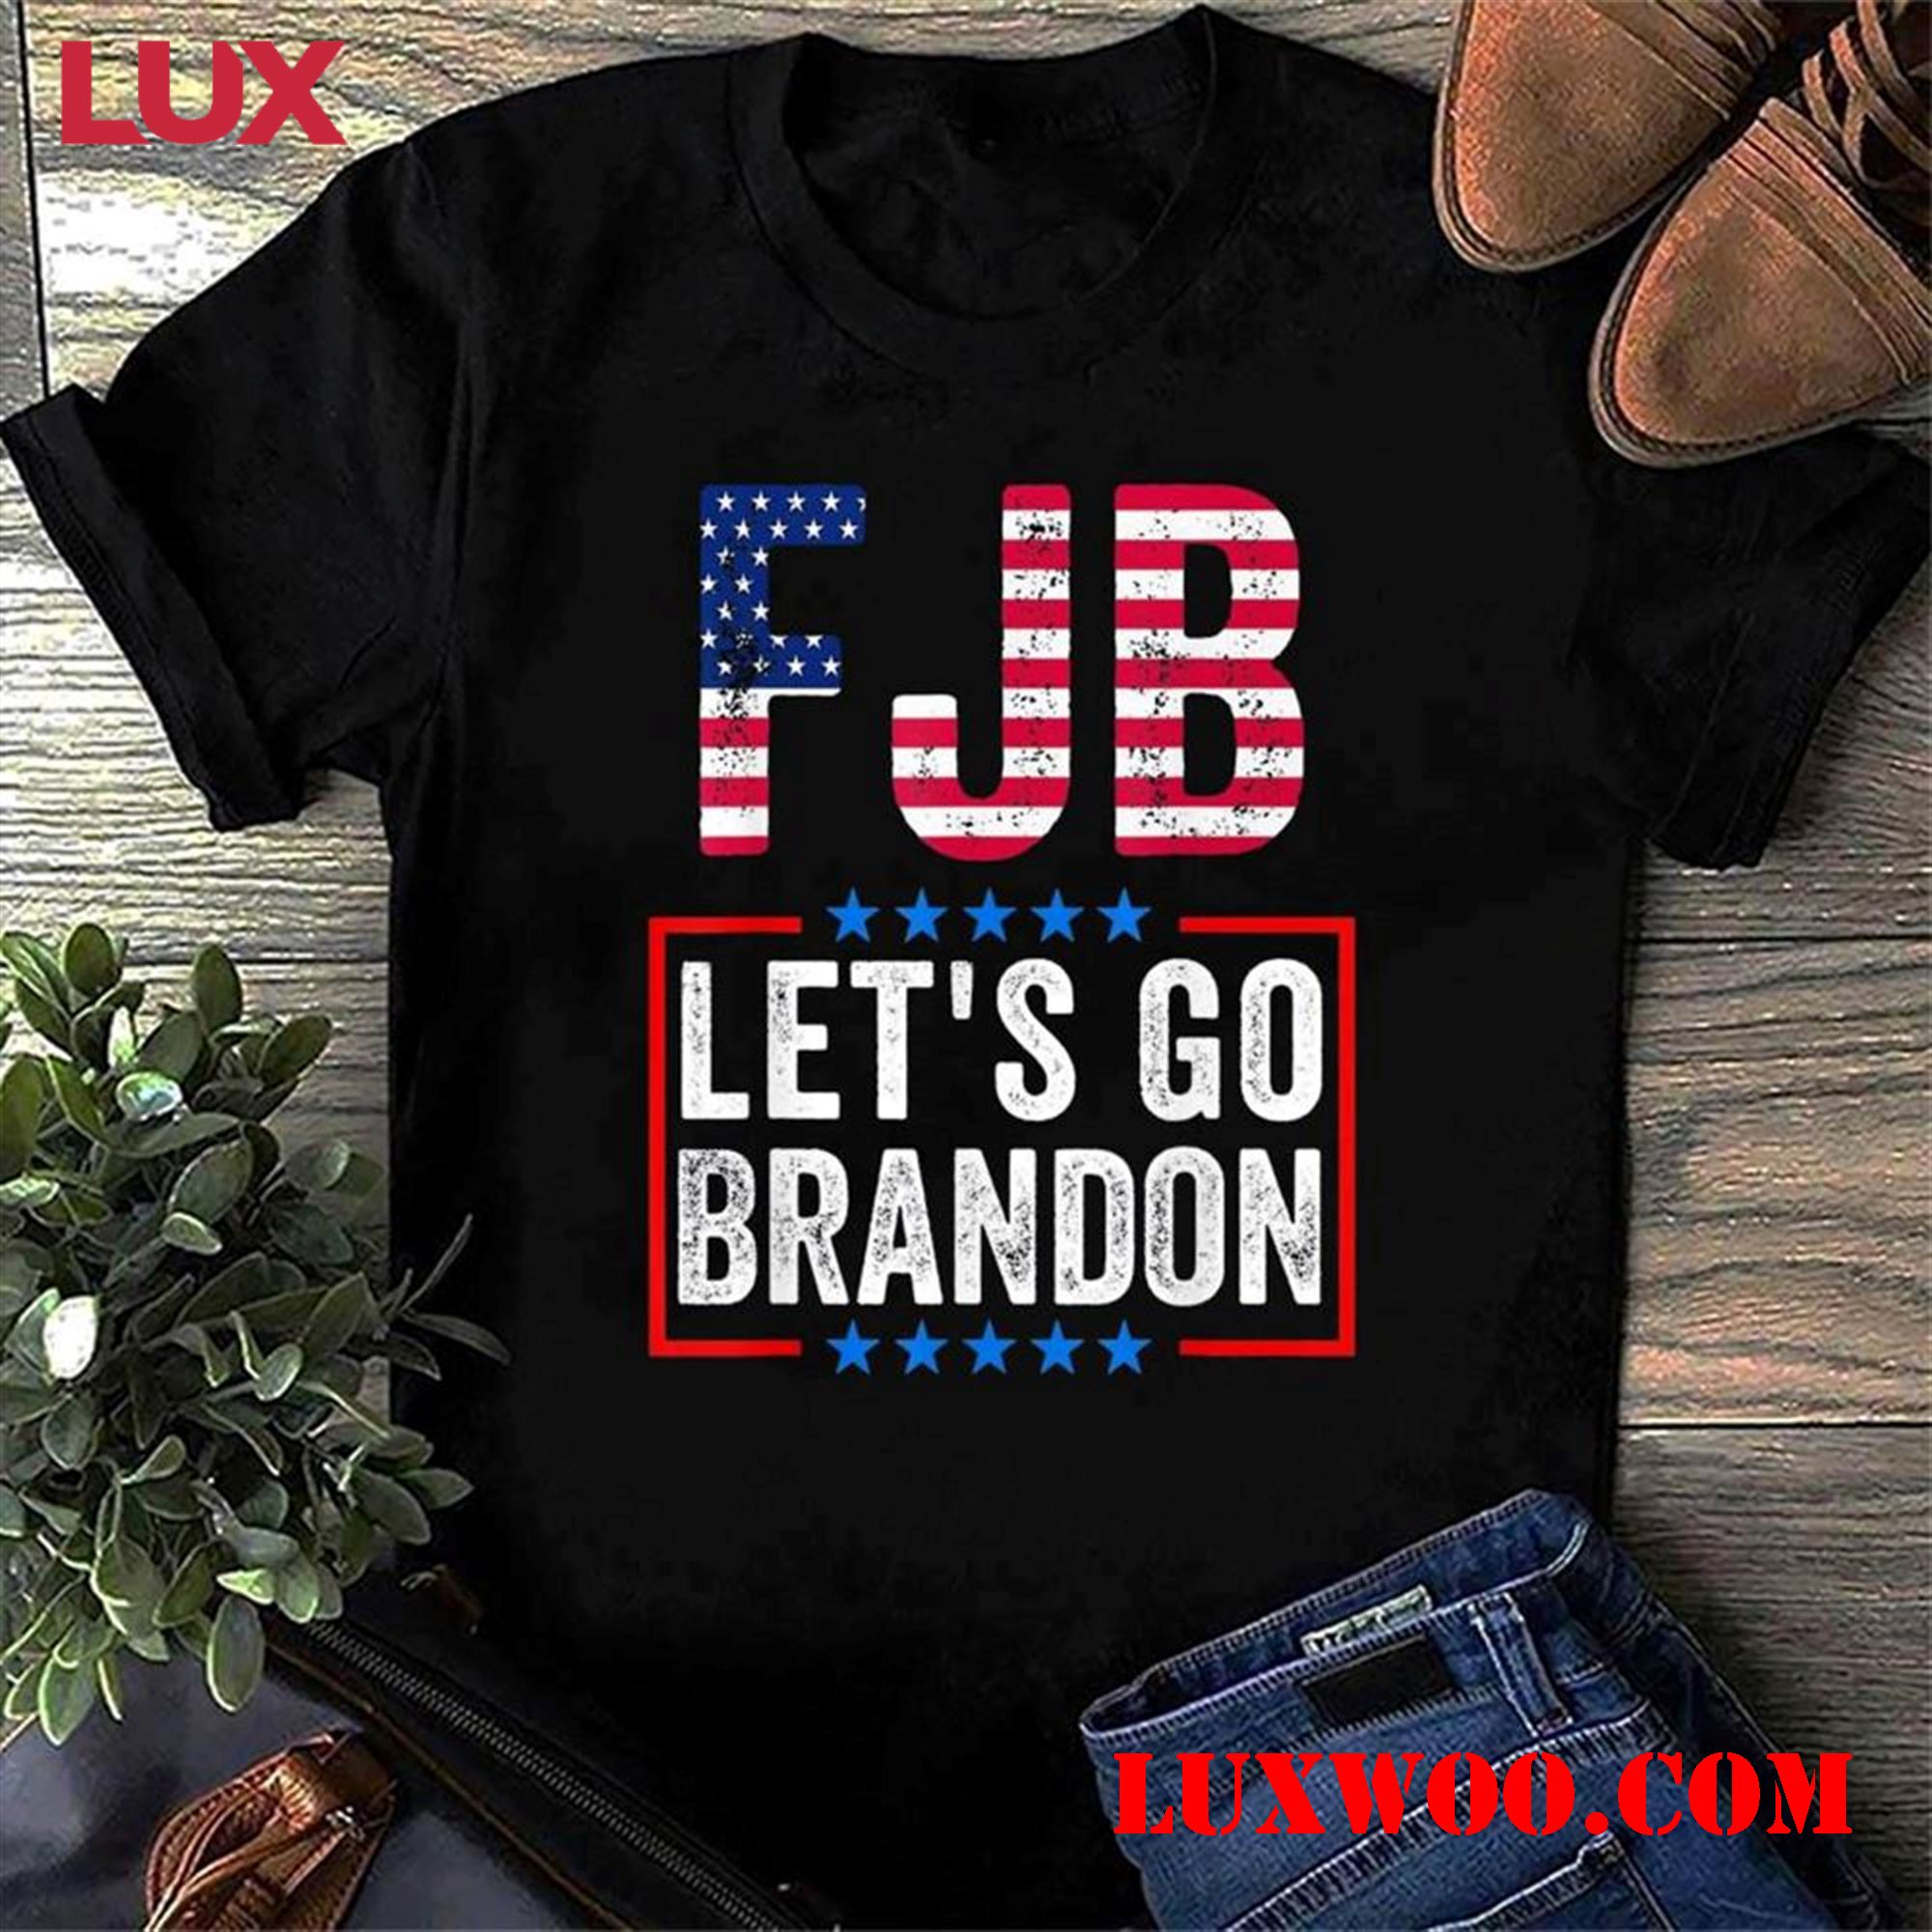 Let's Go Brandon Tee Show Your Patriotic Spirit For America